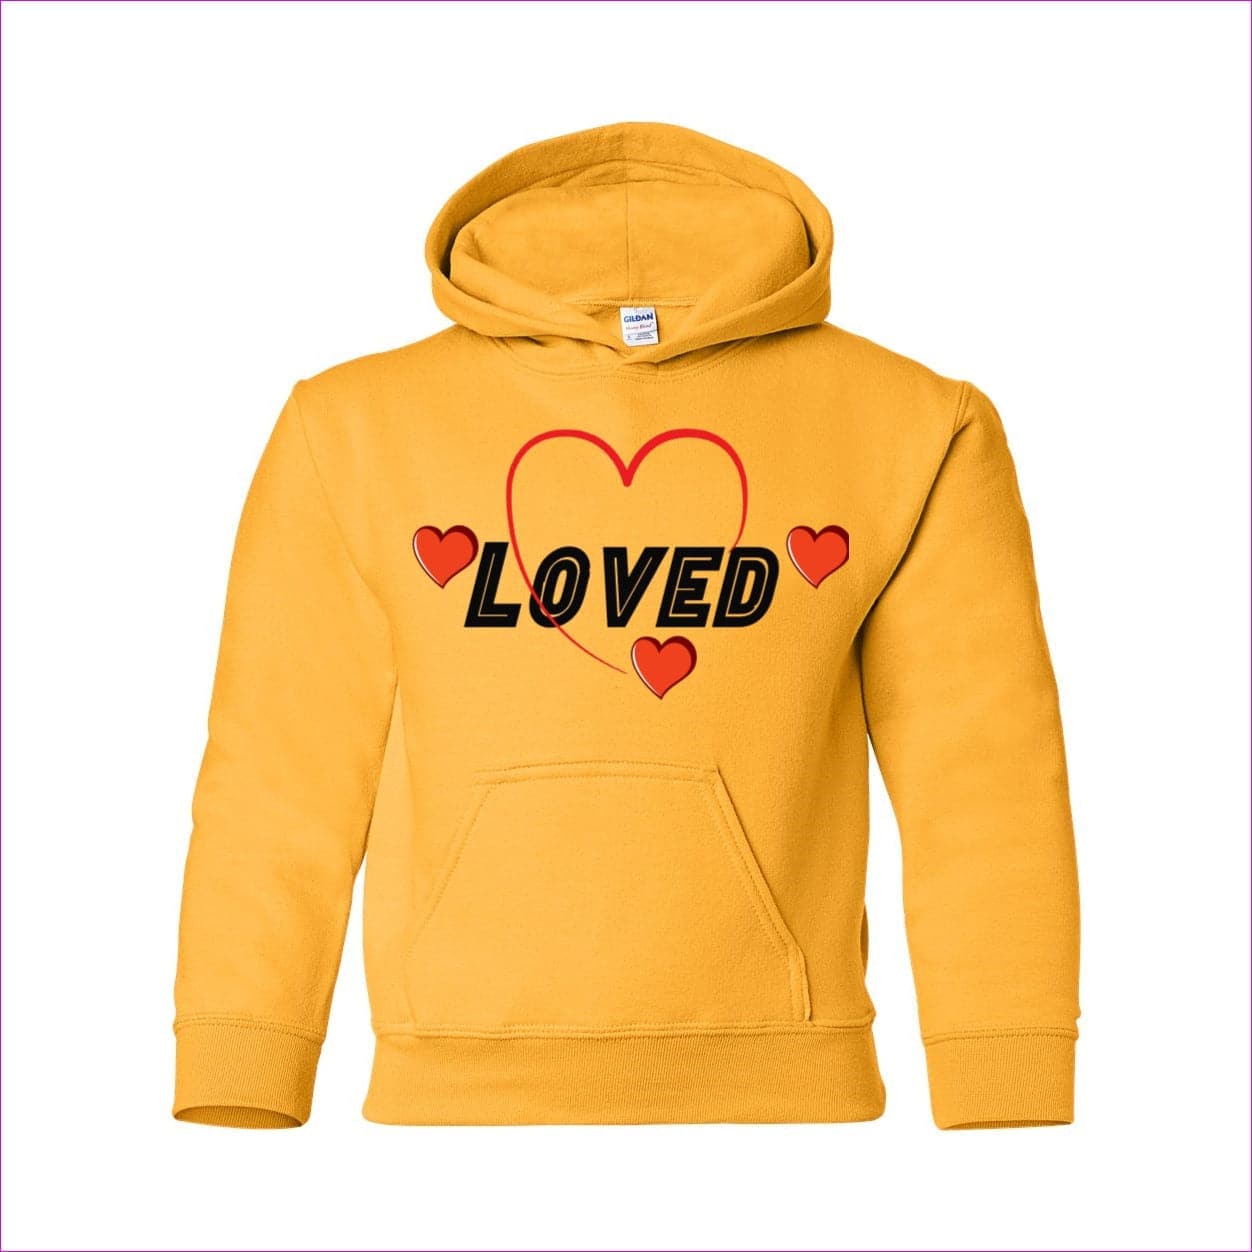 Gold - Loved Heavy Blend Youth Hooded Sweatshirt - kids hoodie at TFC&H Co.